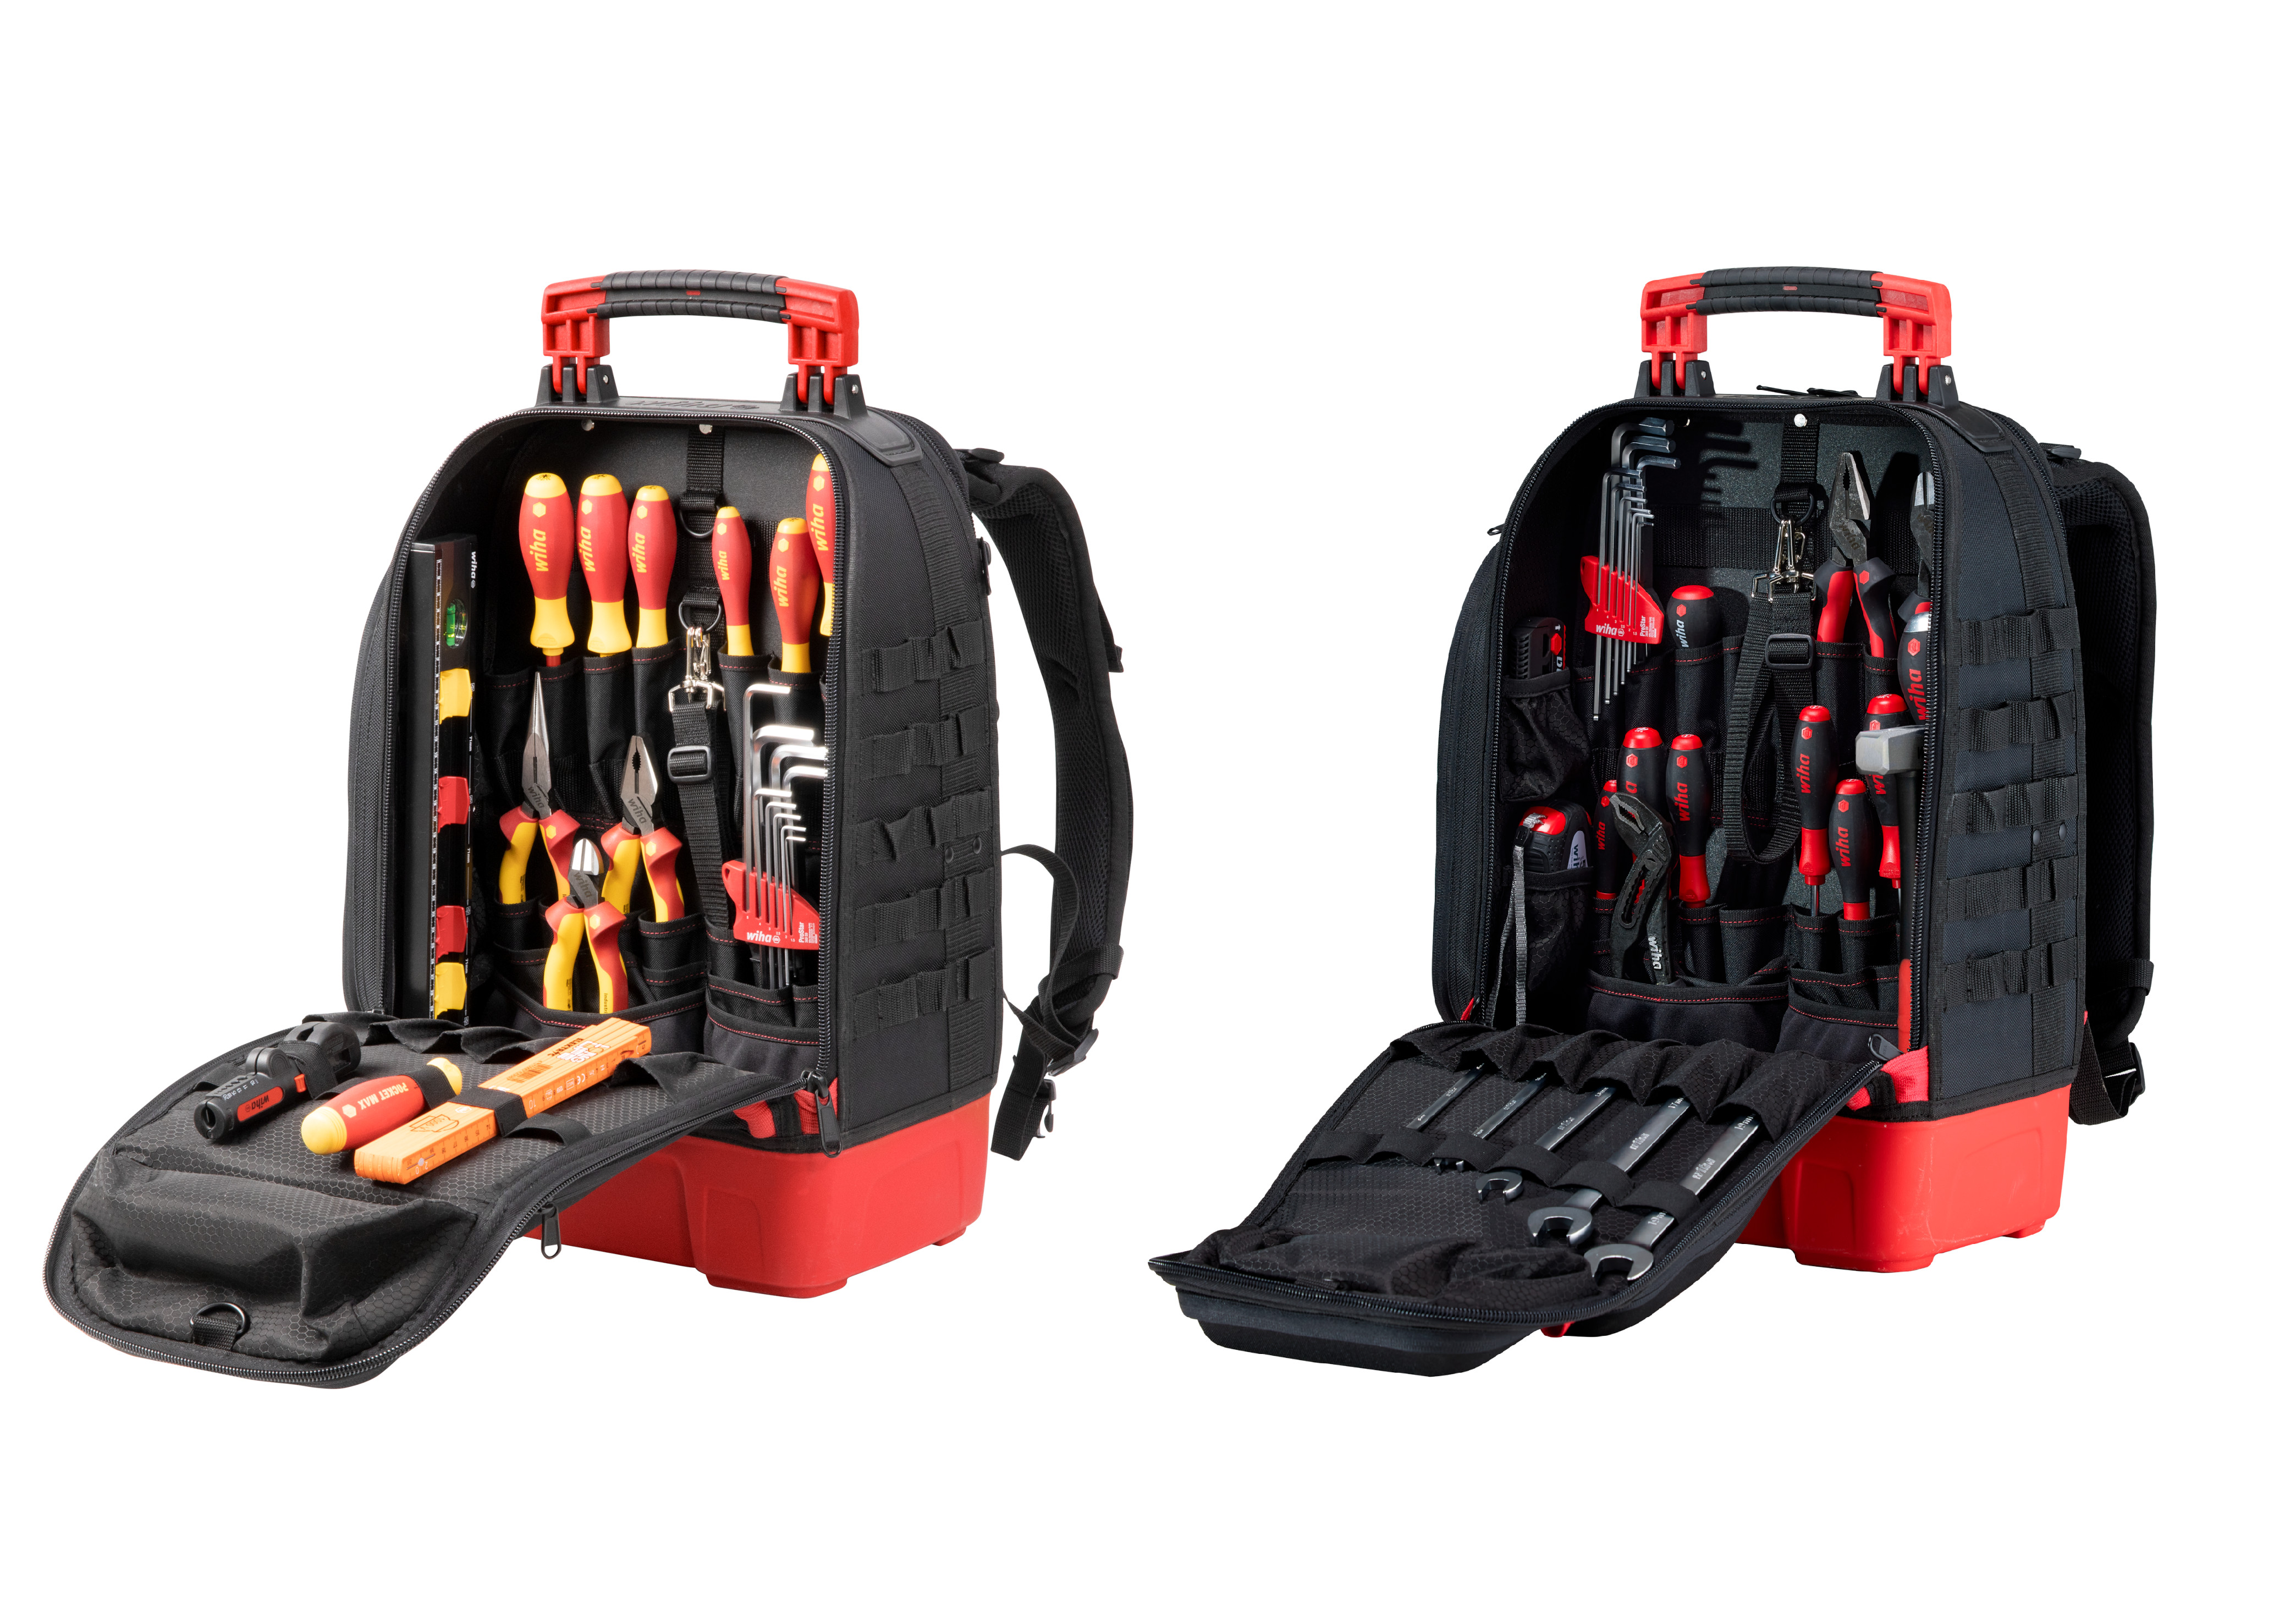 Wiha Tool Backpack Sets